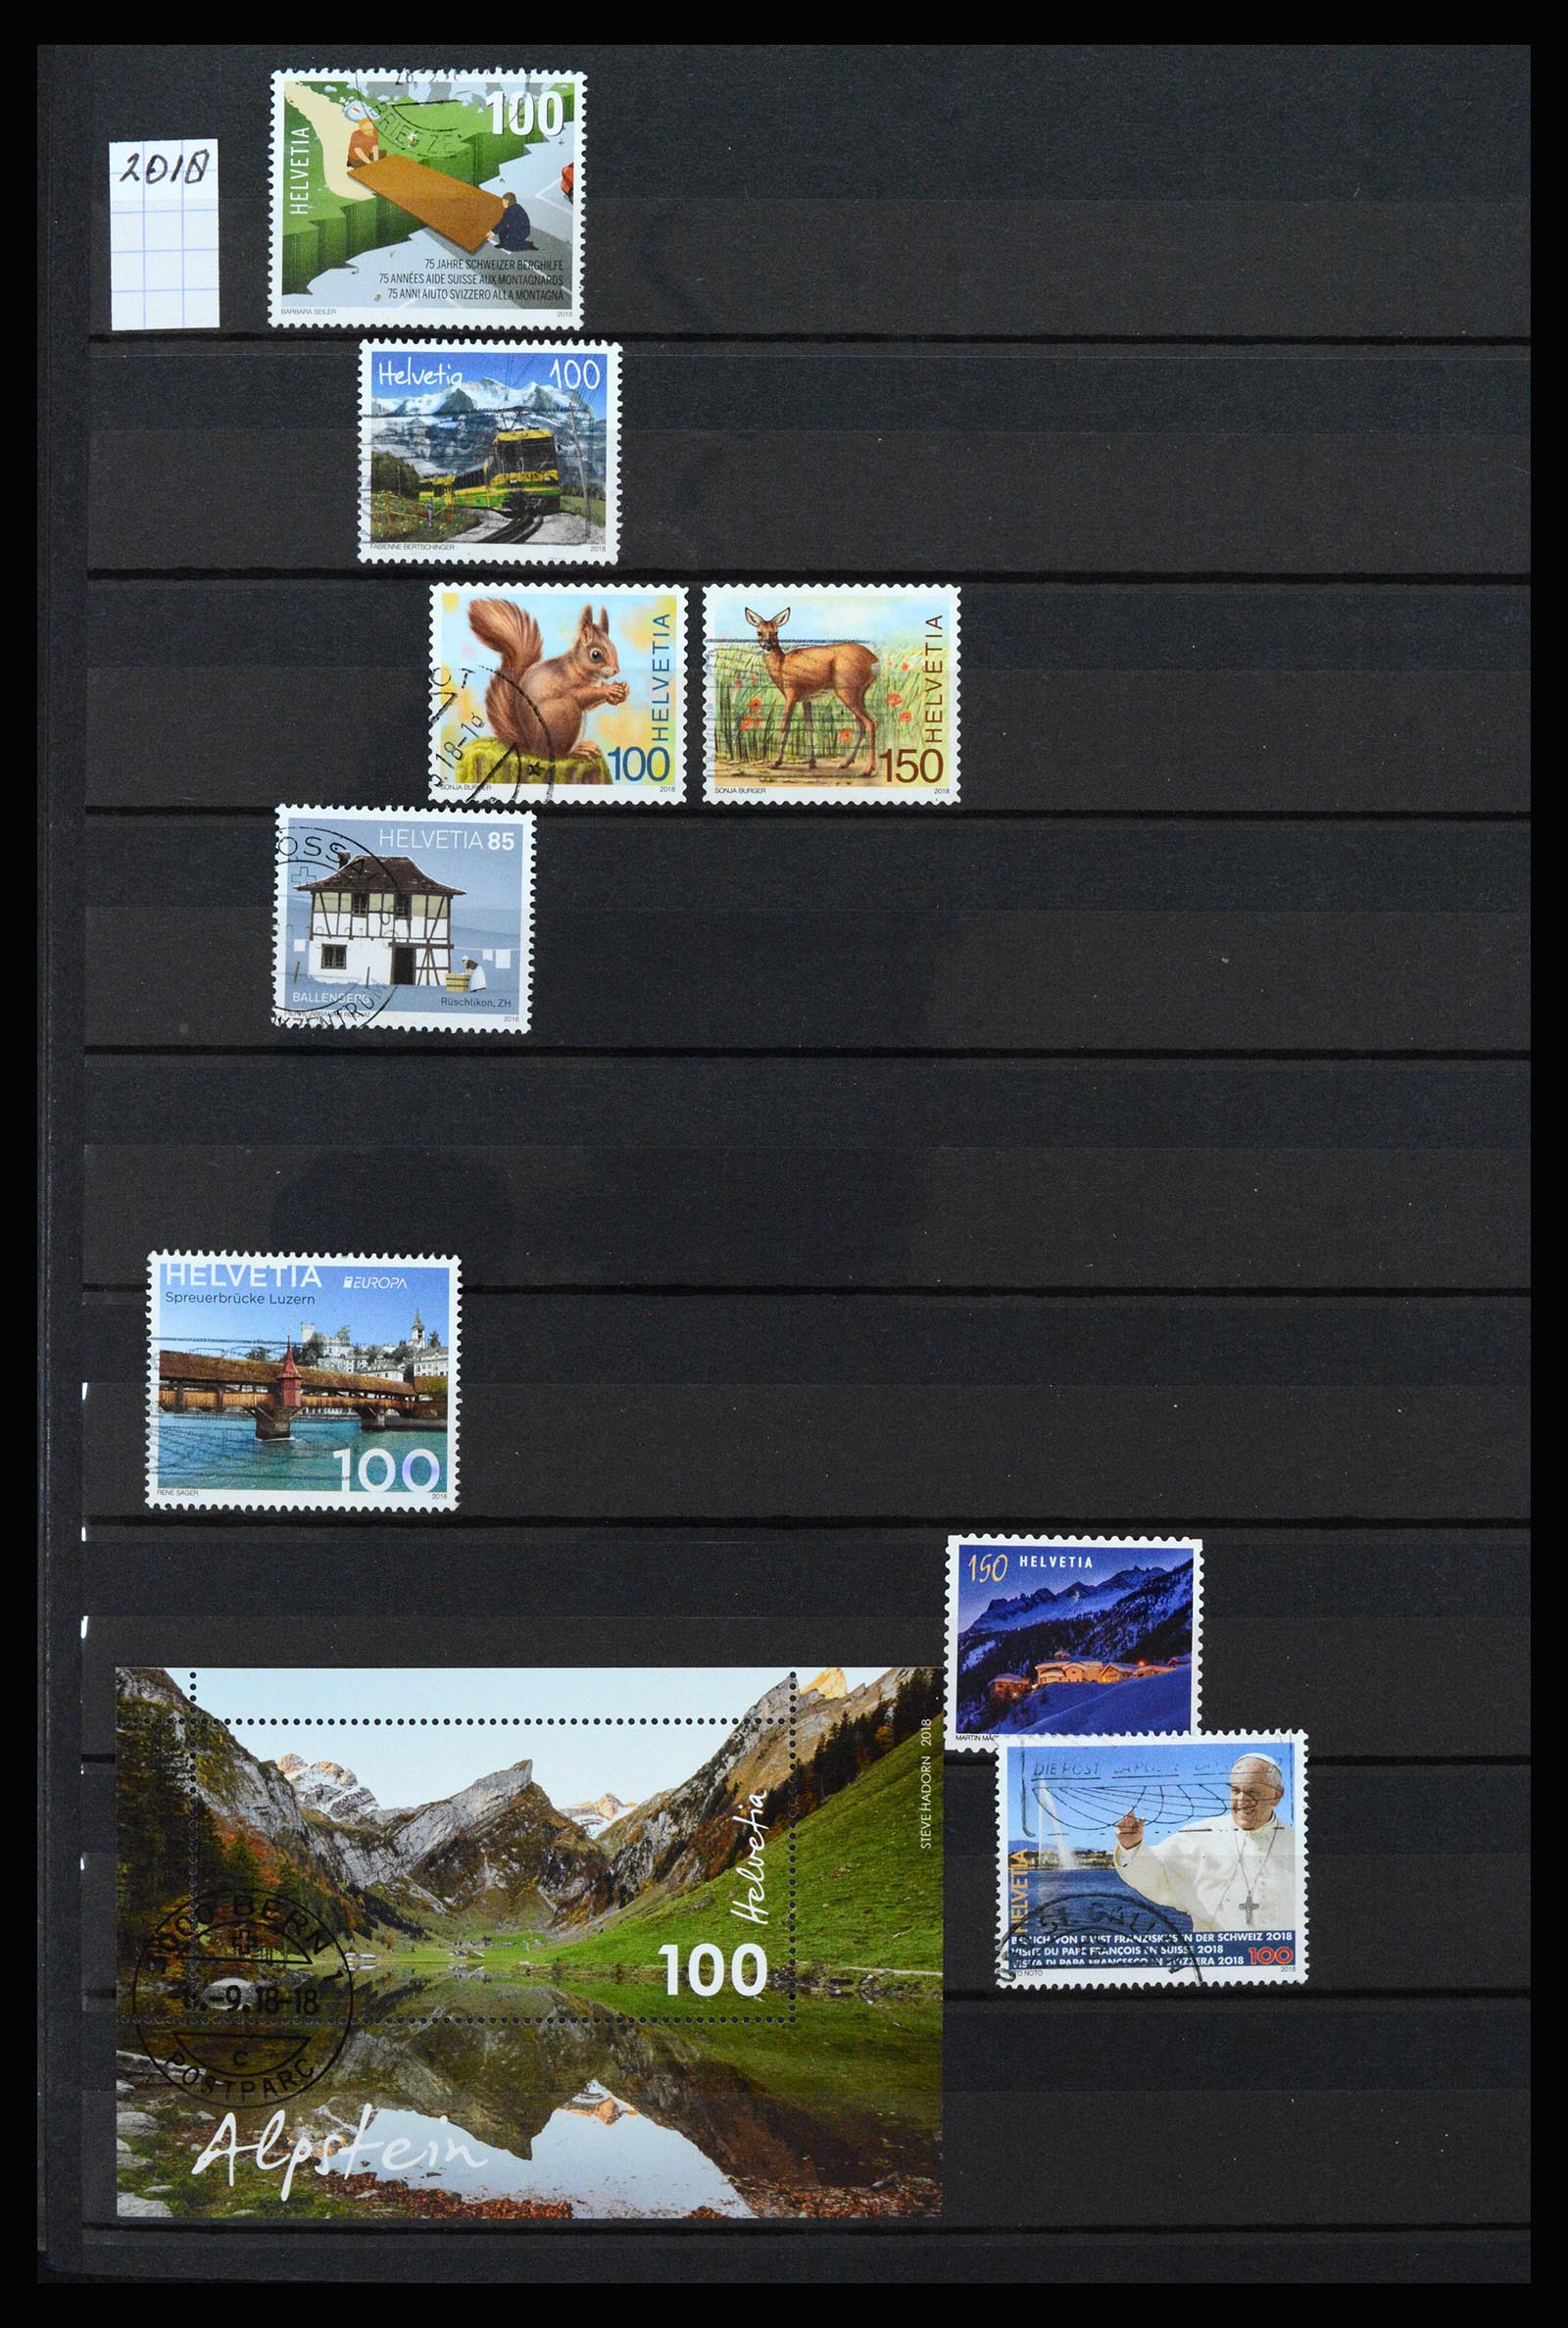 37225 192 - Stamp collection 37225 Switzerland 1854-2020.